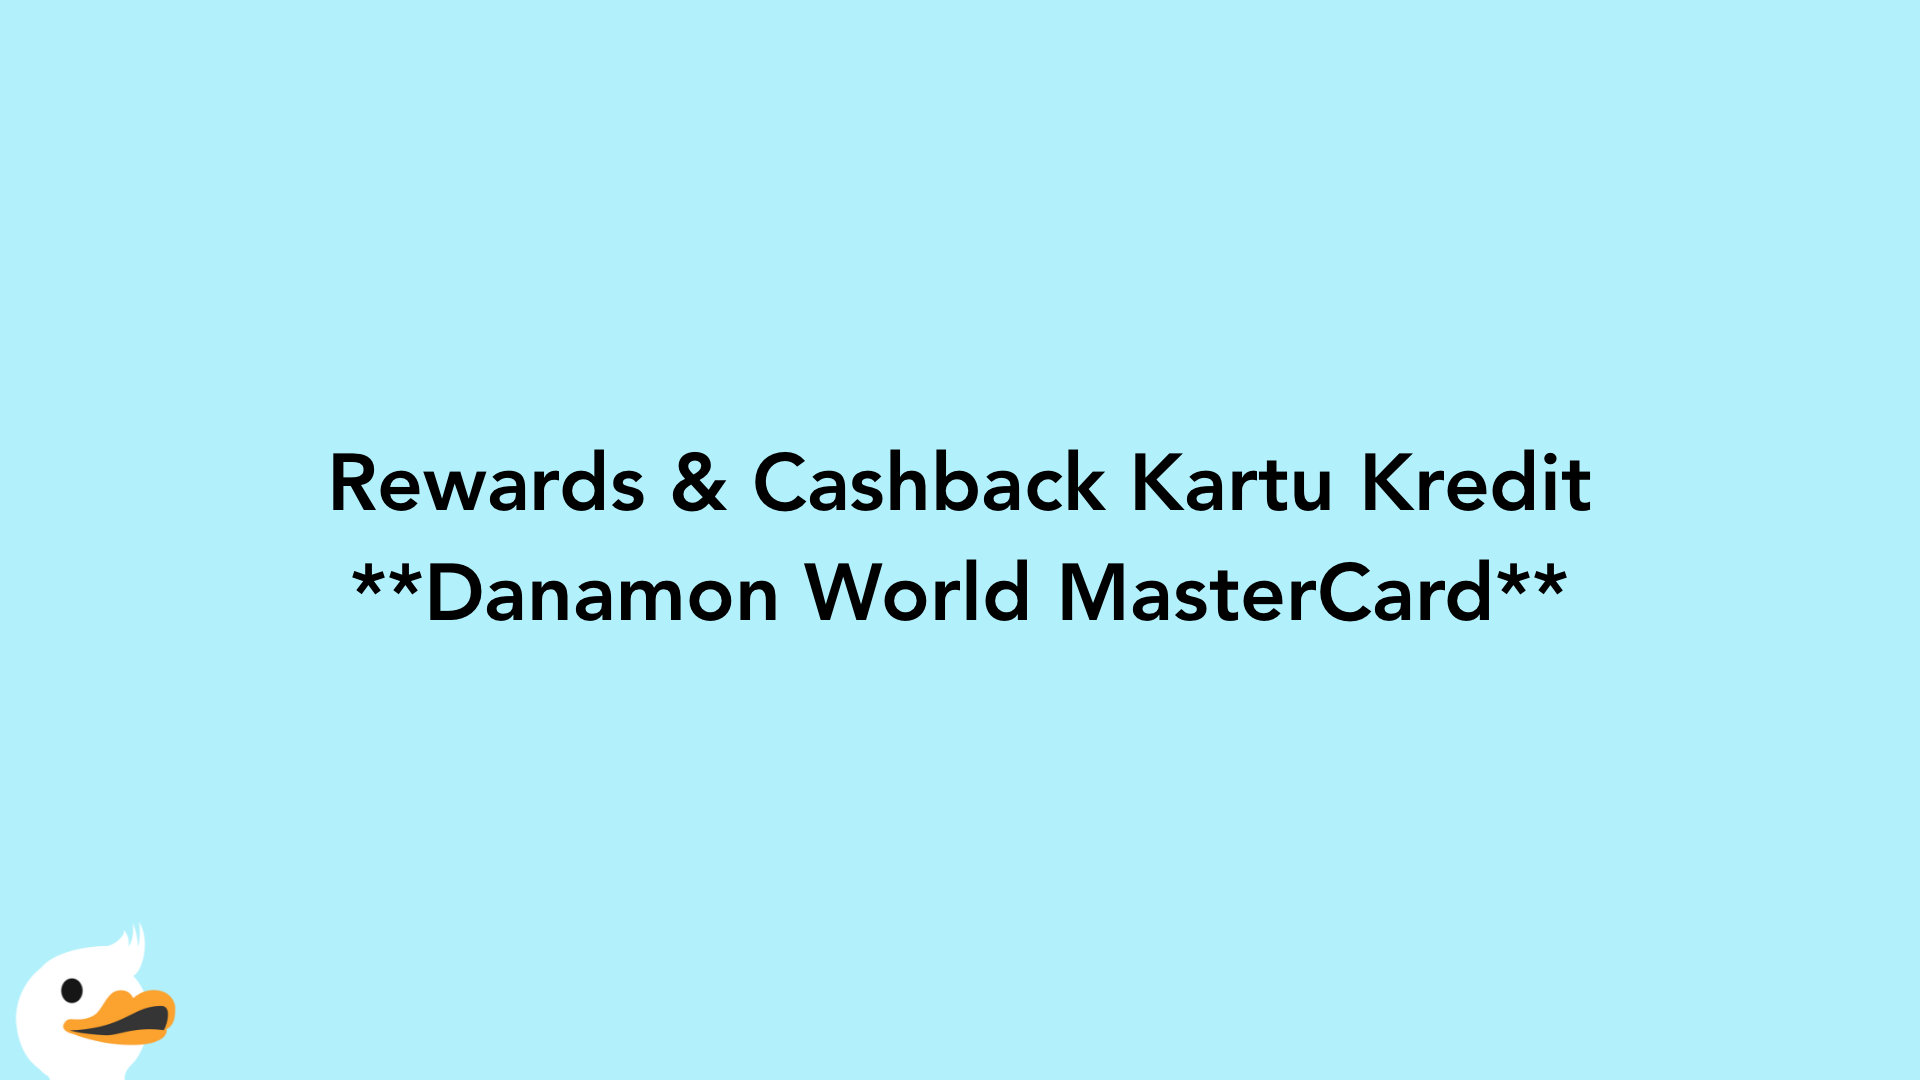 Rewards & Cashback Kartu Kredit Danamon World MasterCard